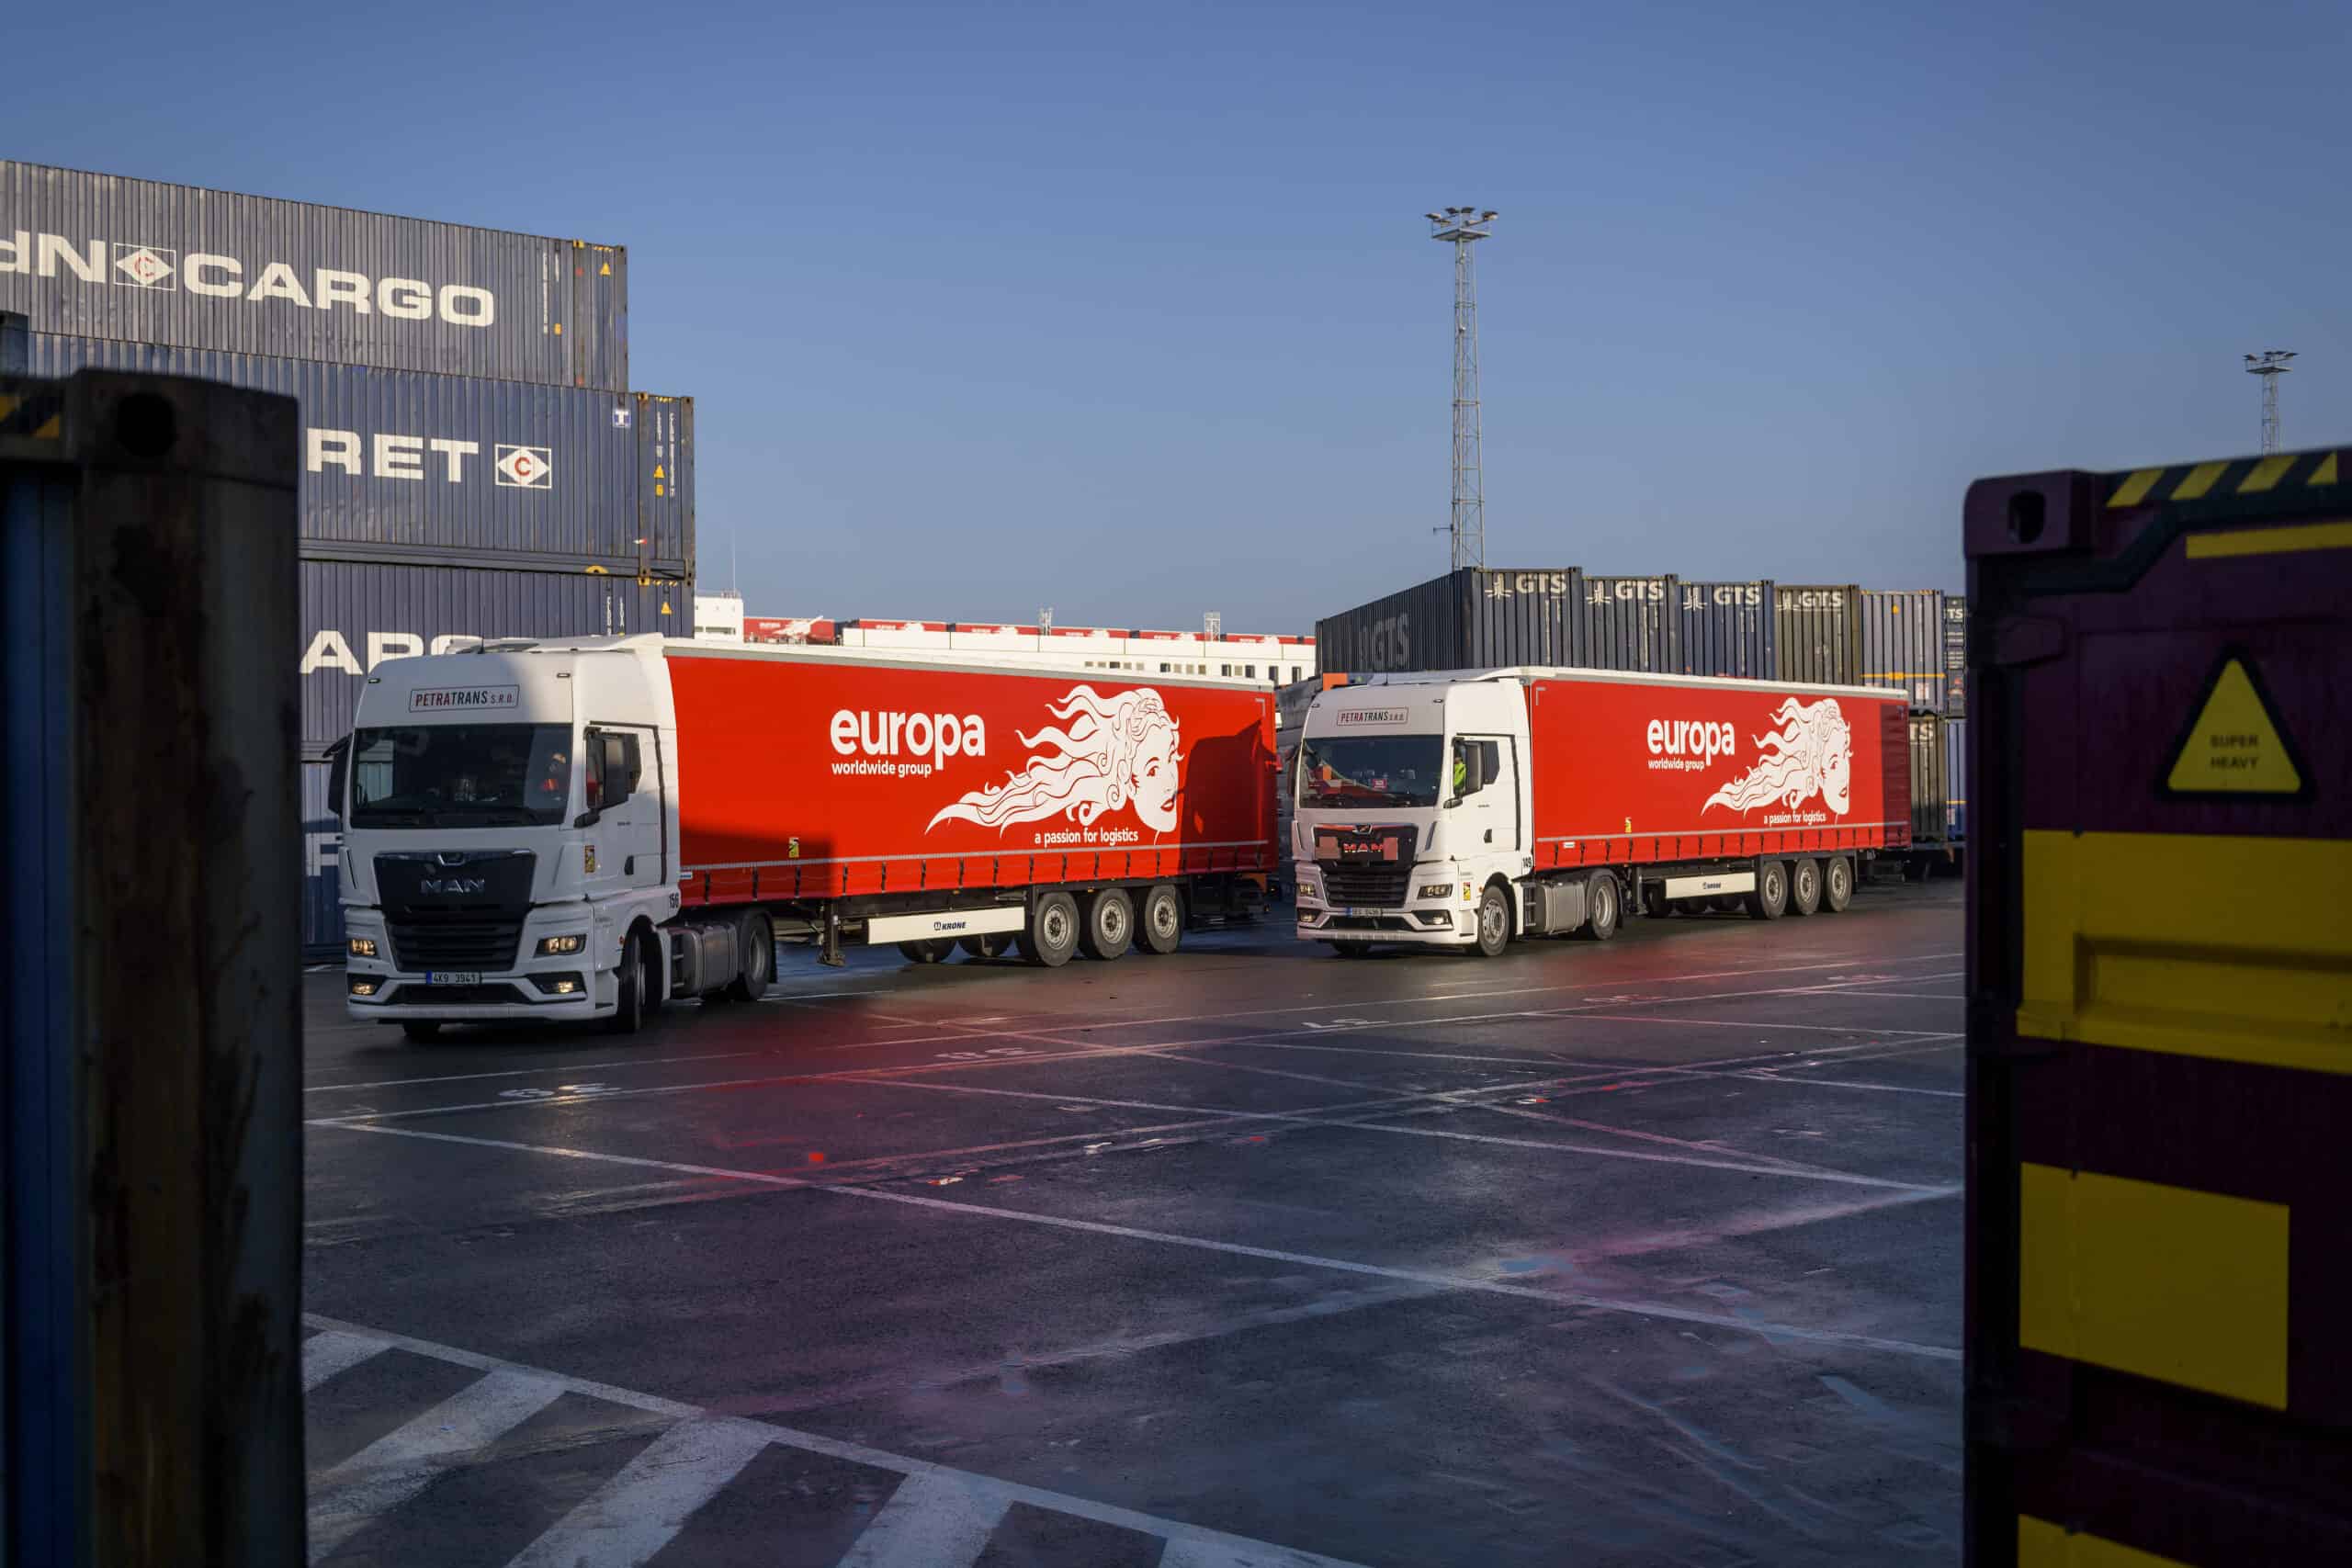 Europa Road trucks at the port